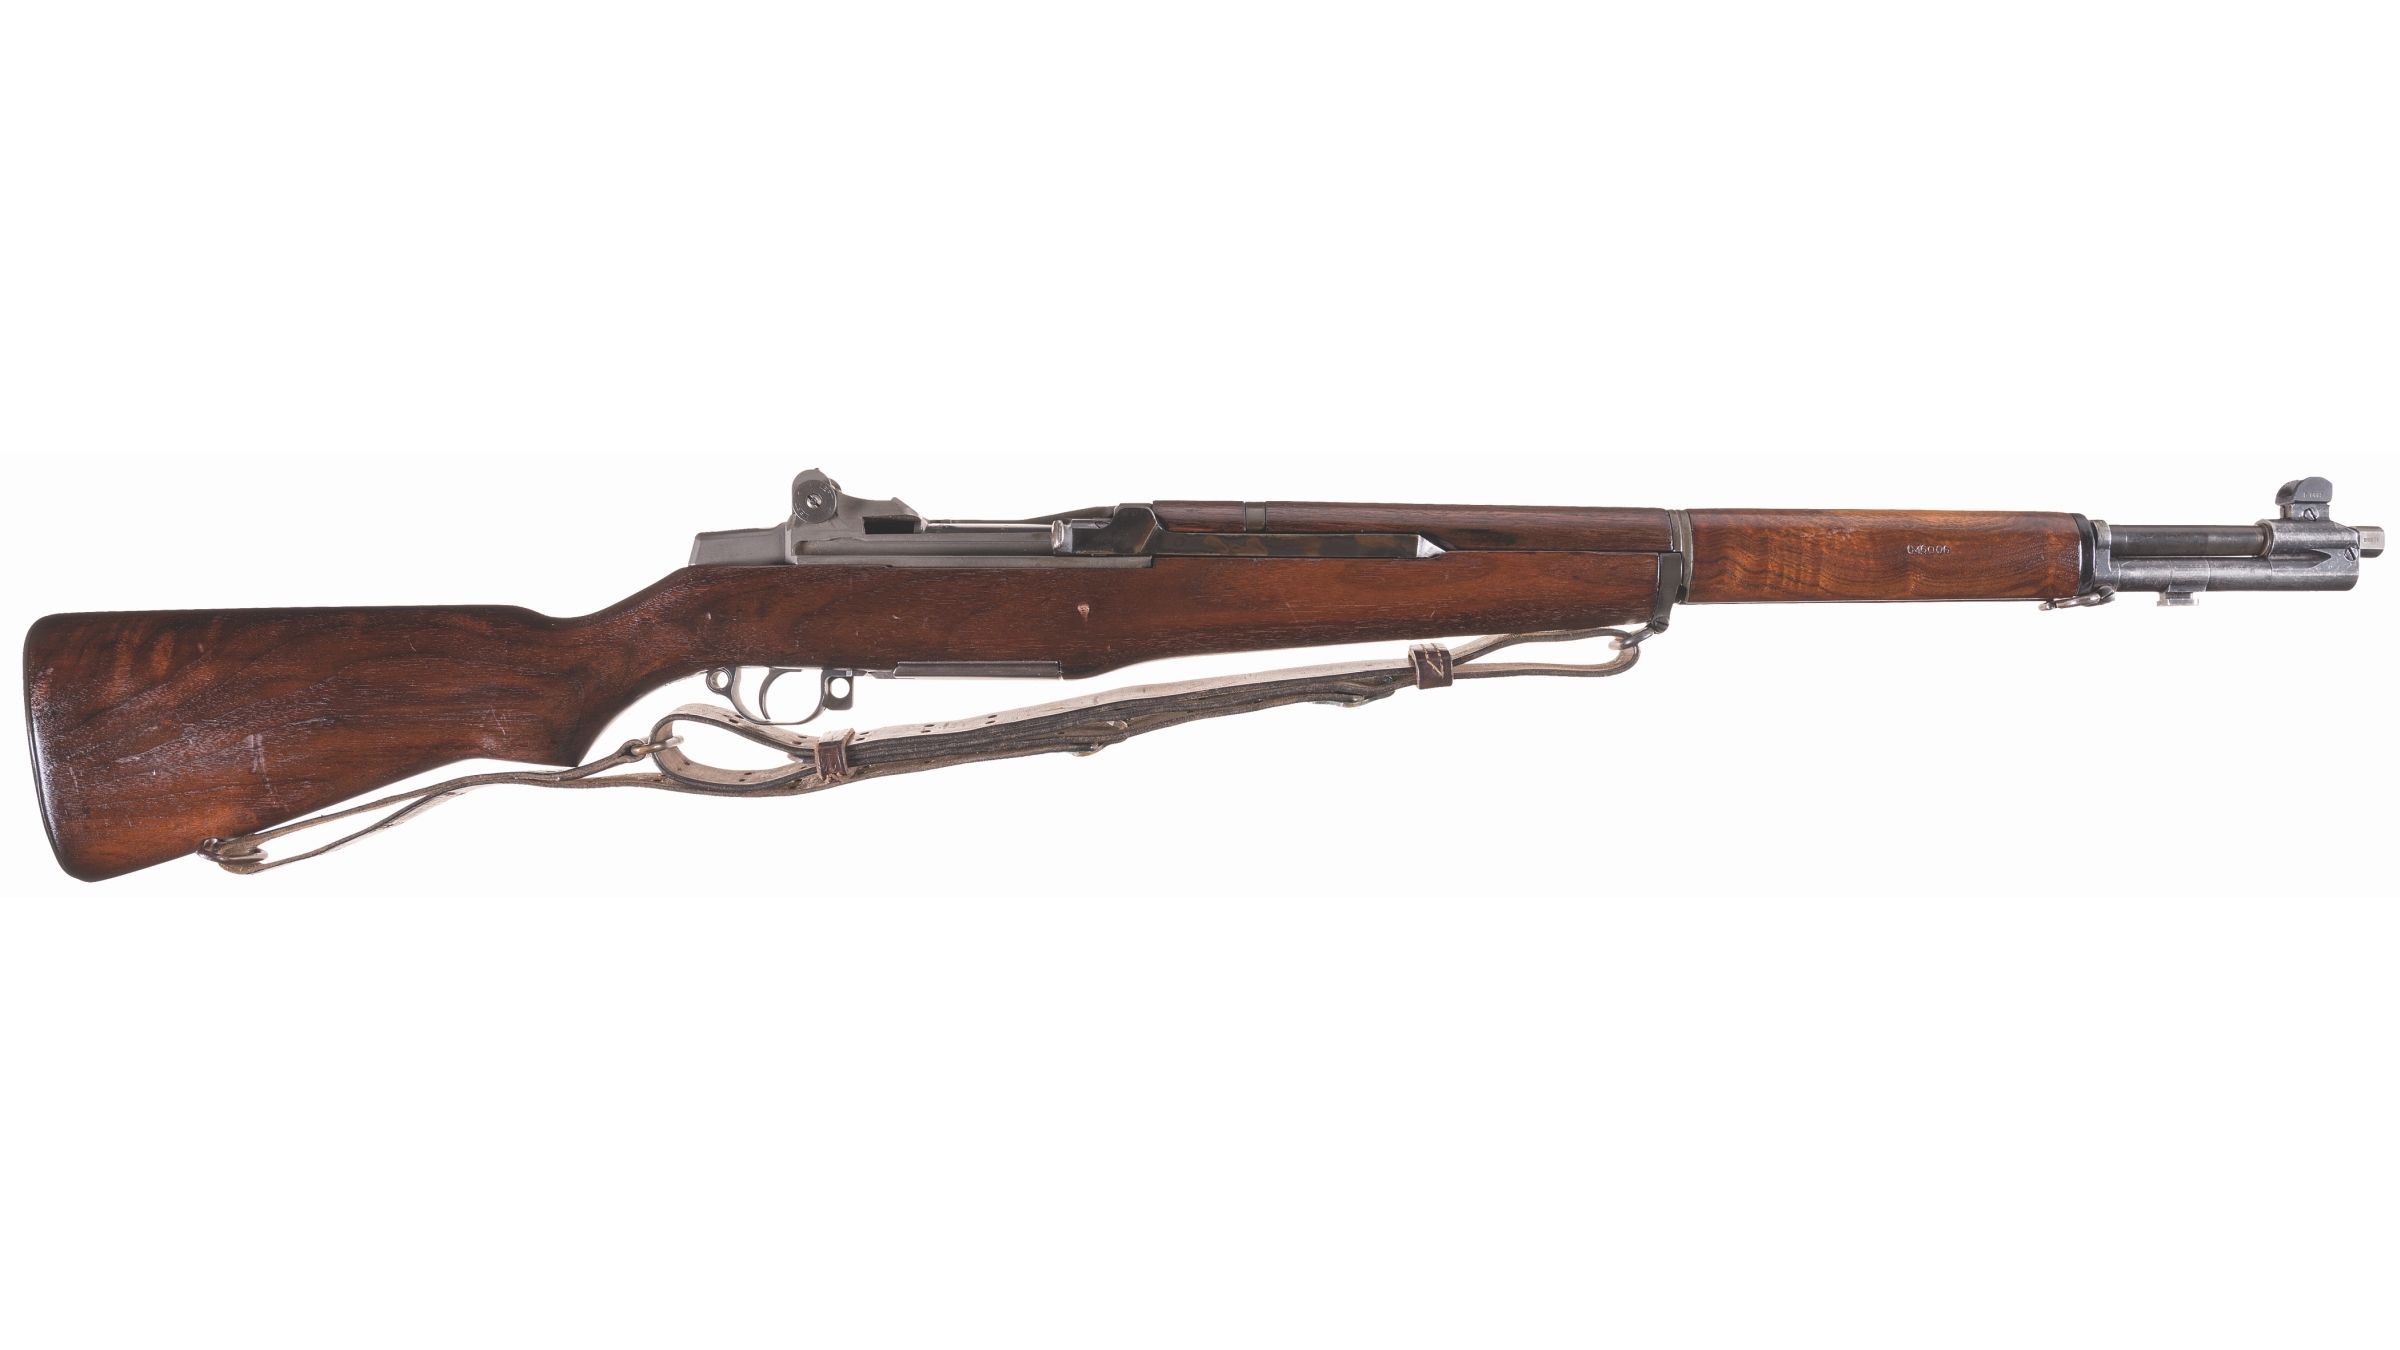 Springfield Armory M1 Garand .30-06 caliber rifle in the 6 million